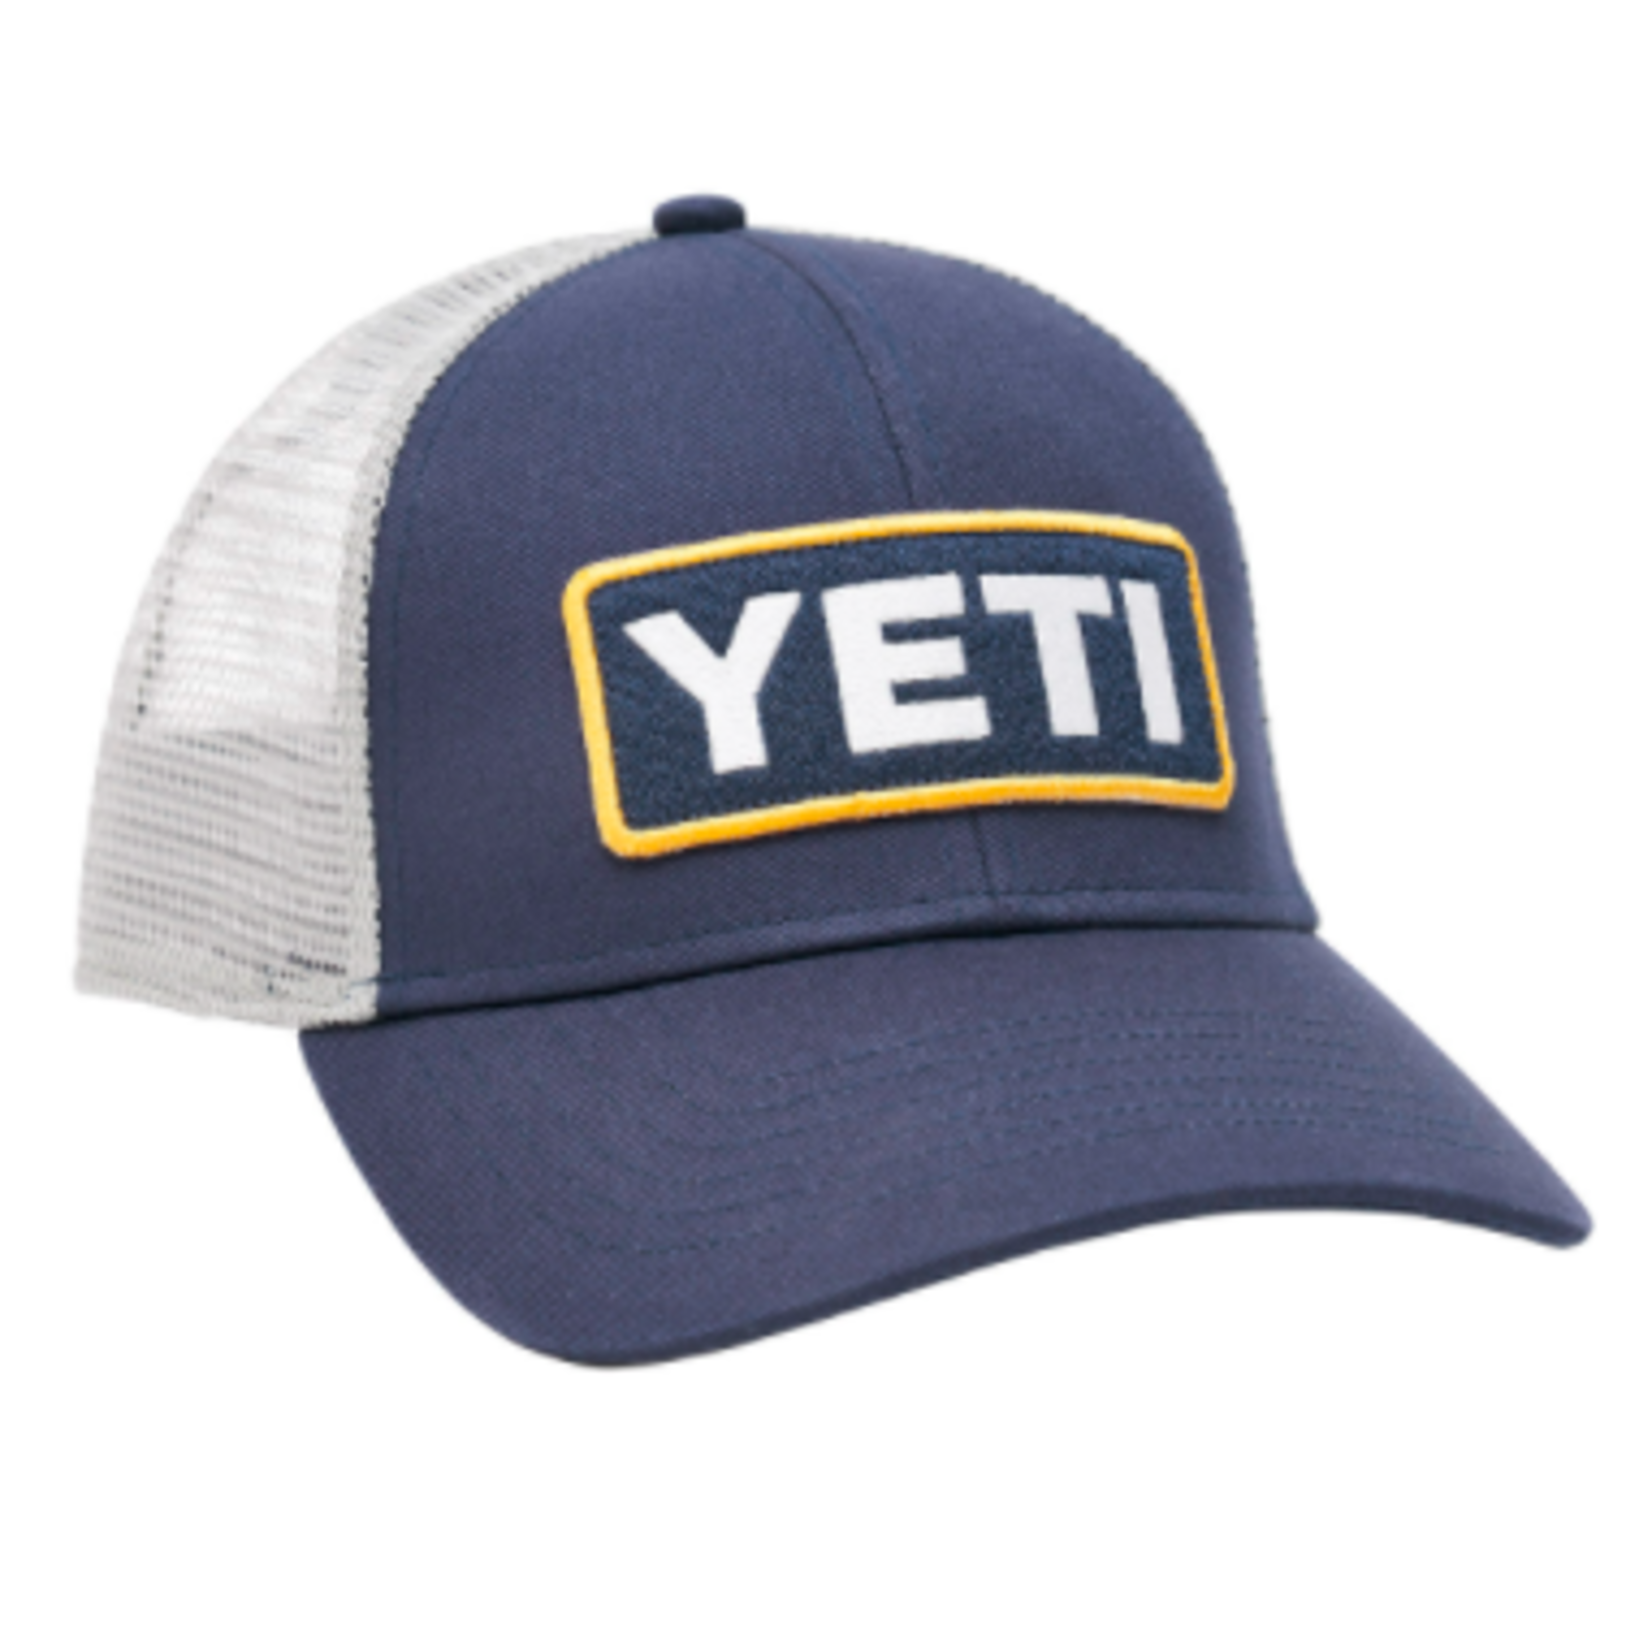 https://cdn.shoplightspeed.com/shops/645299/files/38329094/1652x1652x2/yeti-mid-pro-logo-badge-trucker-hat.jpg